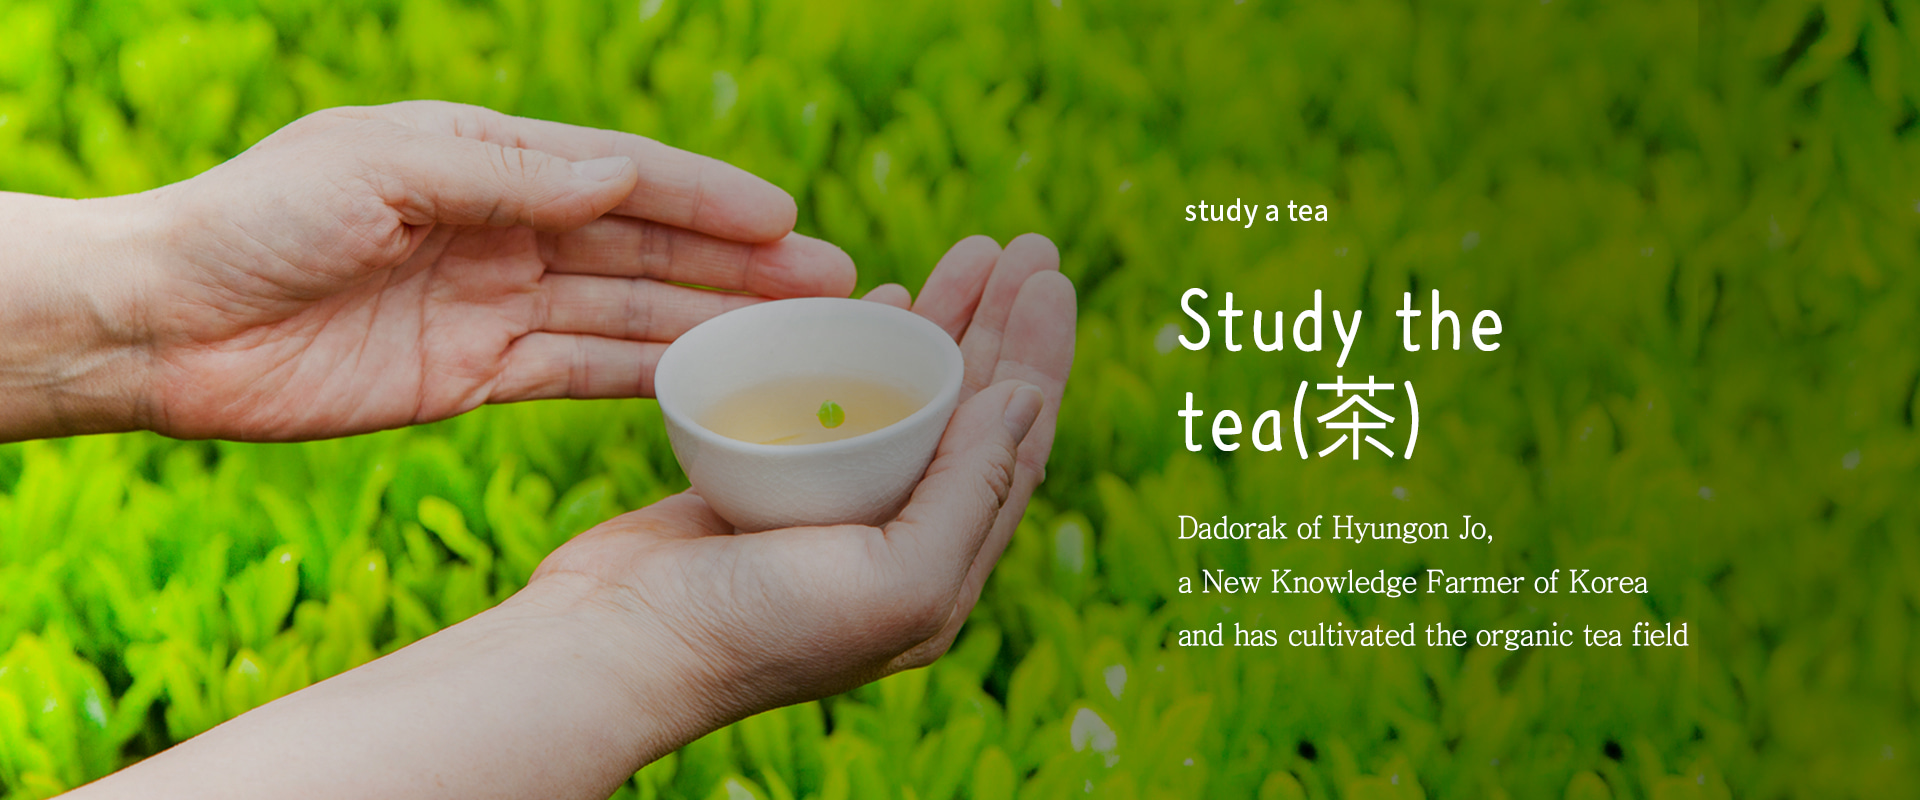 Study the tea